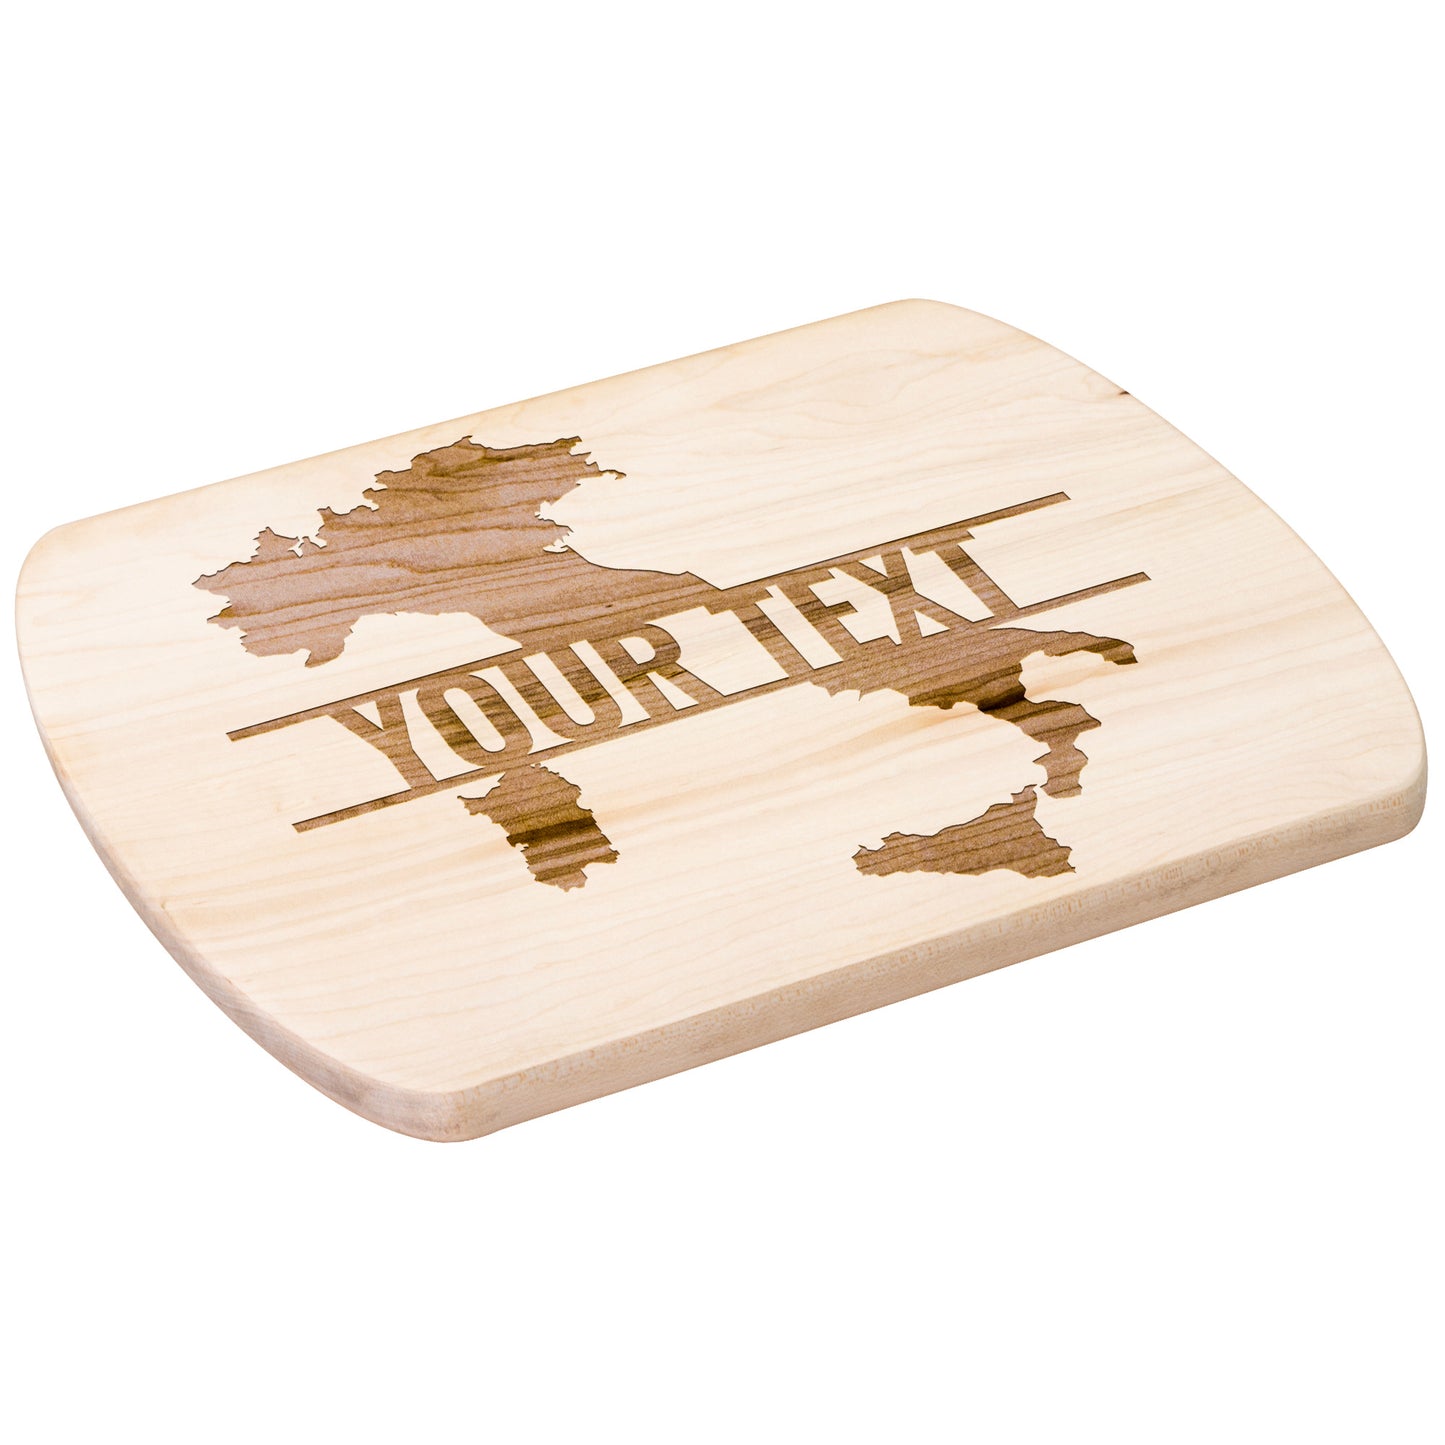 Italy map Wood Cutting Board - Custom text